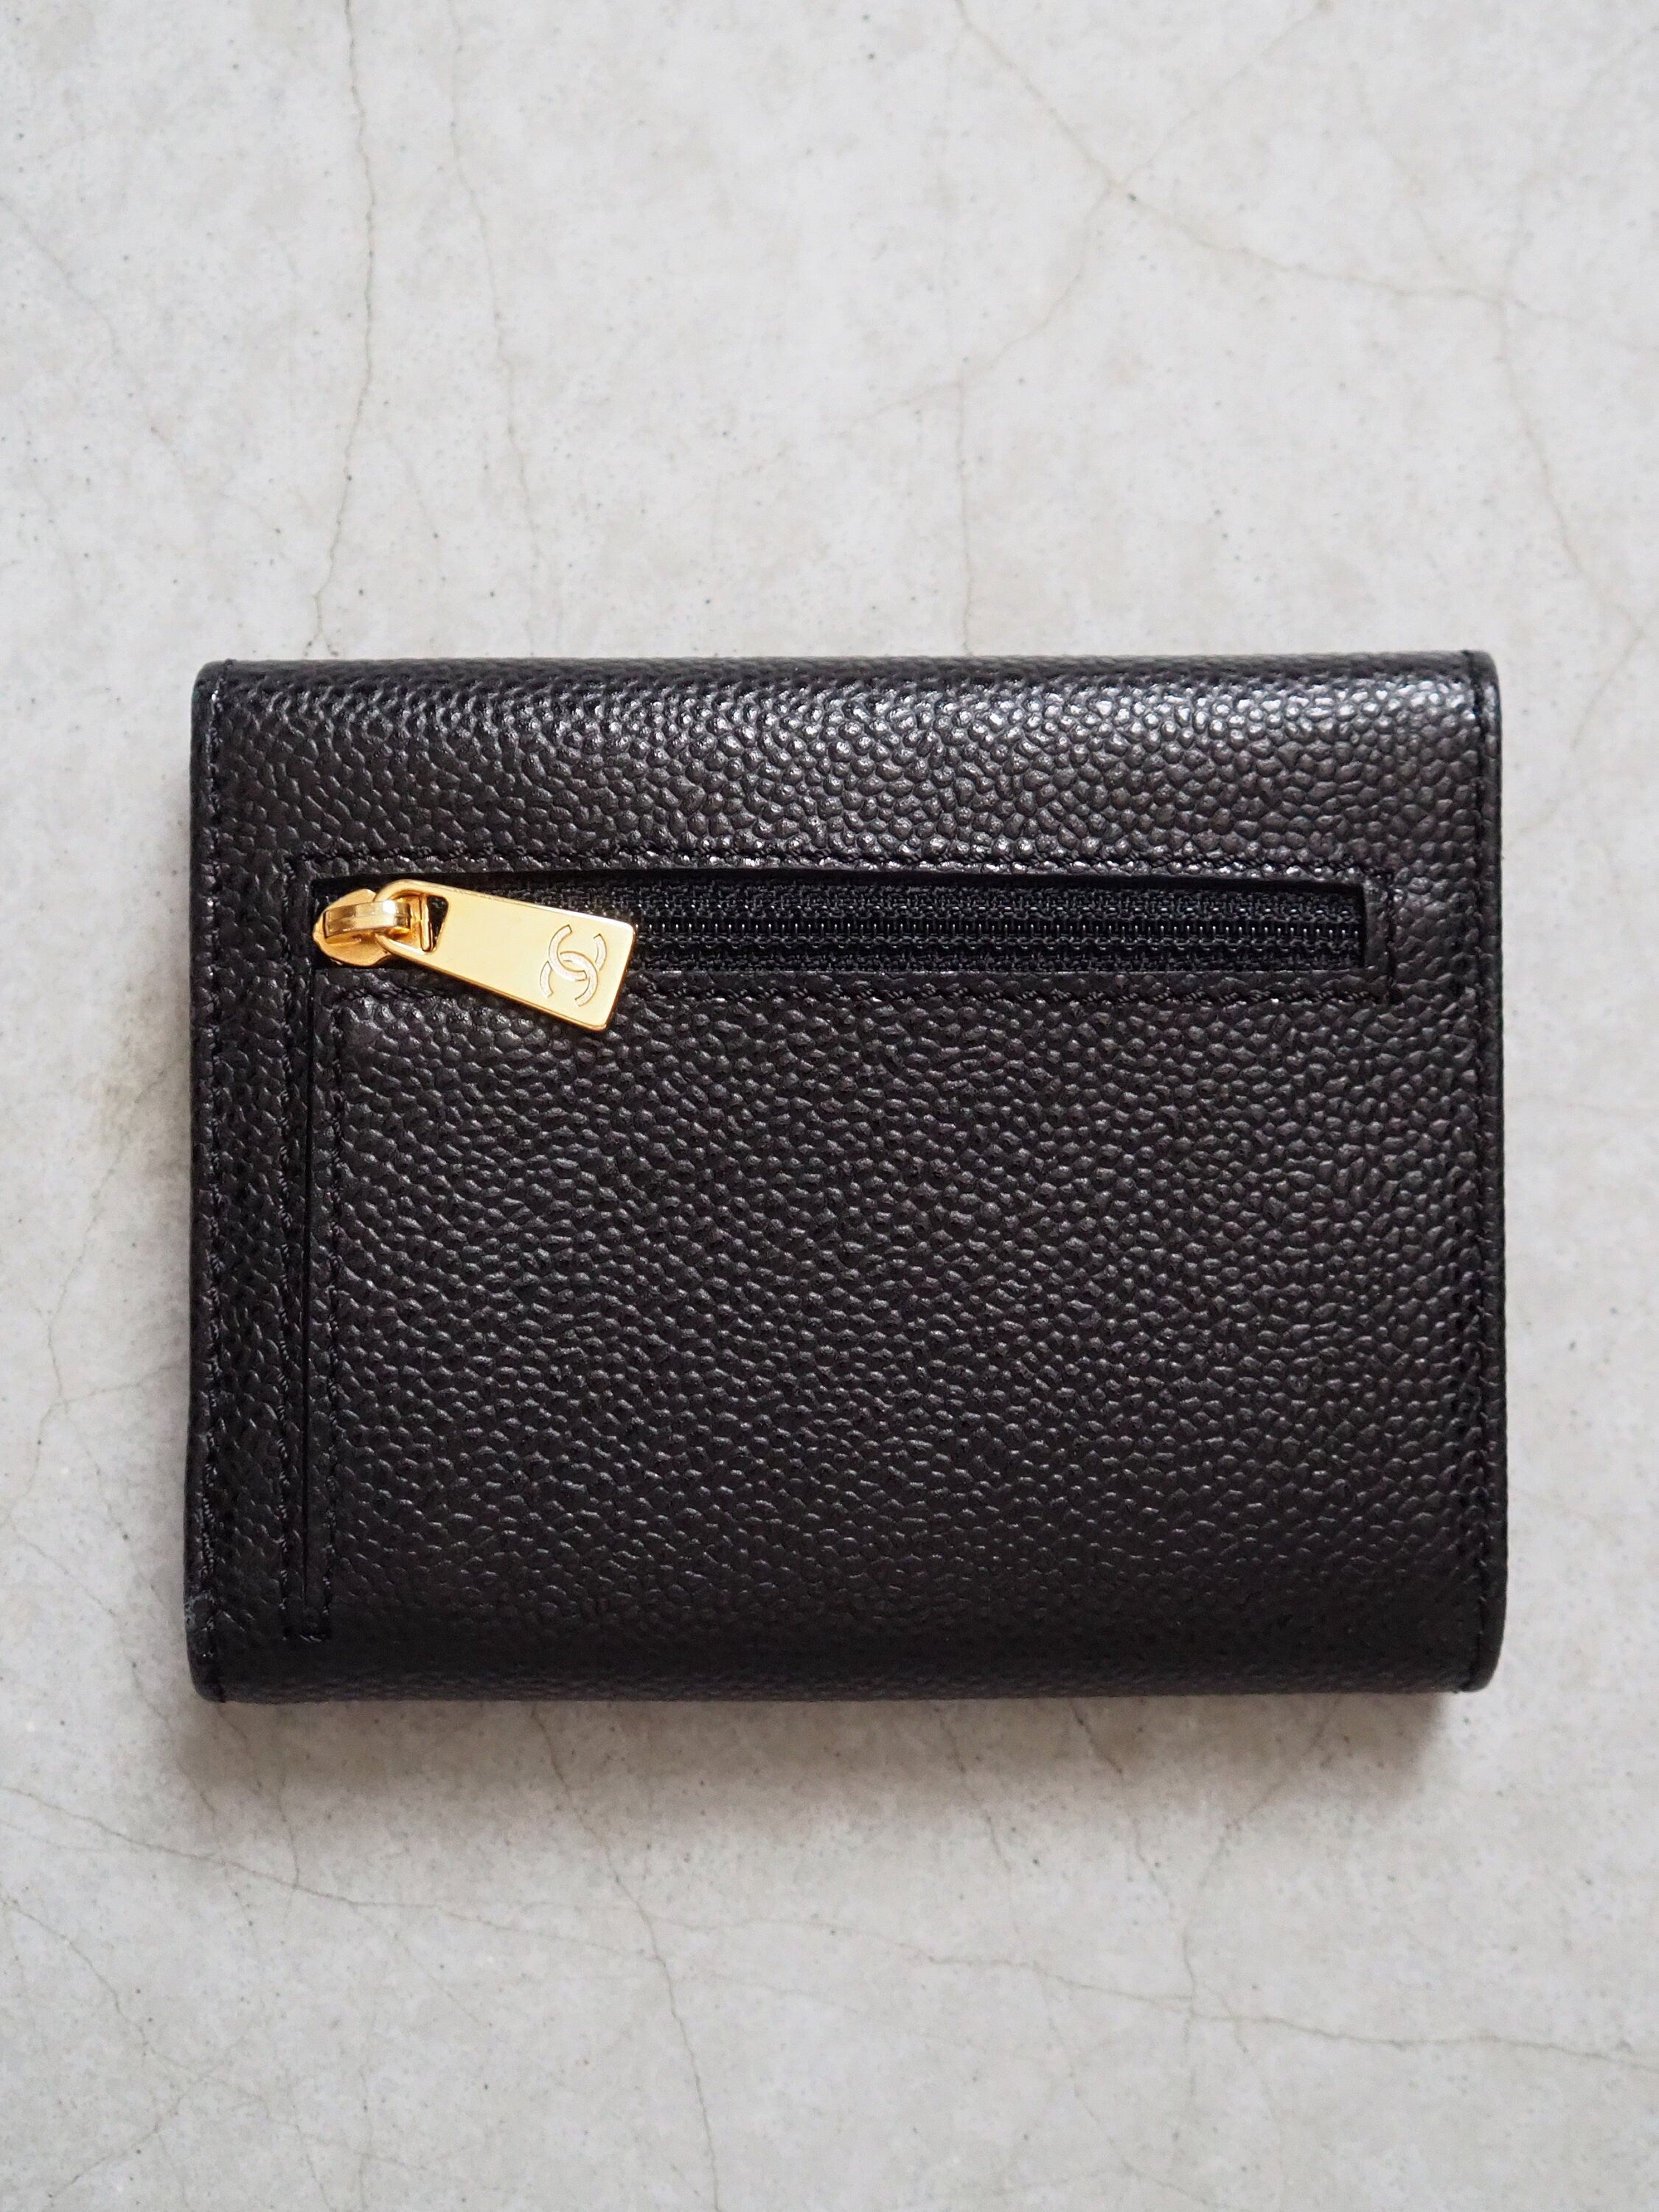 CHANEL COCO Tri-fold Wallet Purse Caviar Skin Leather Black Authentic Vintage Box